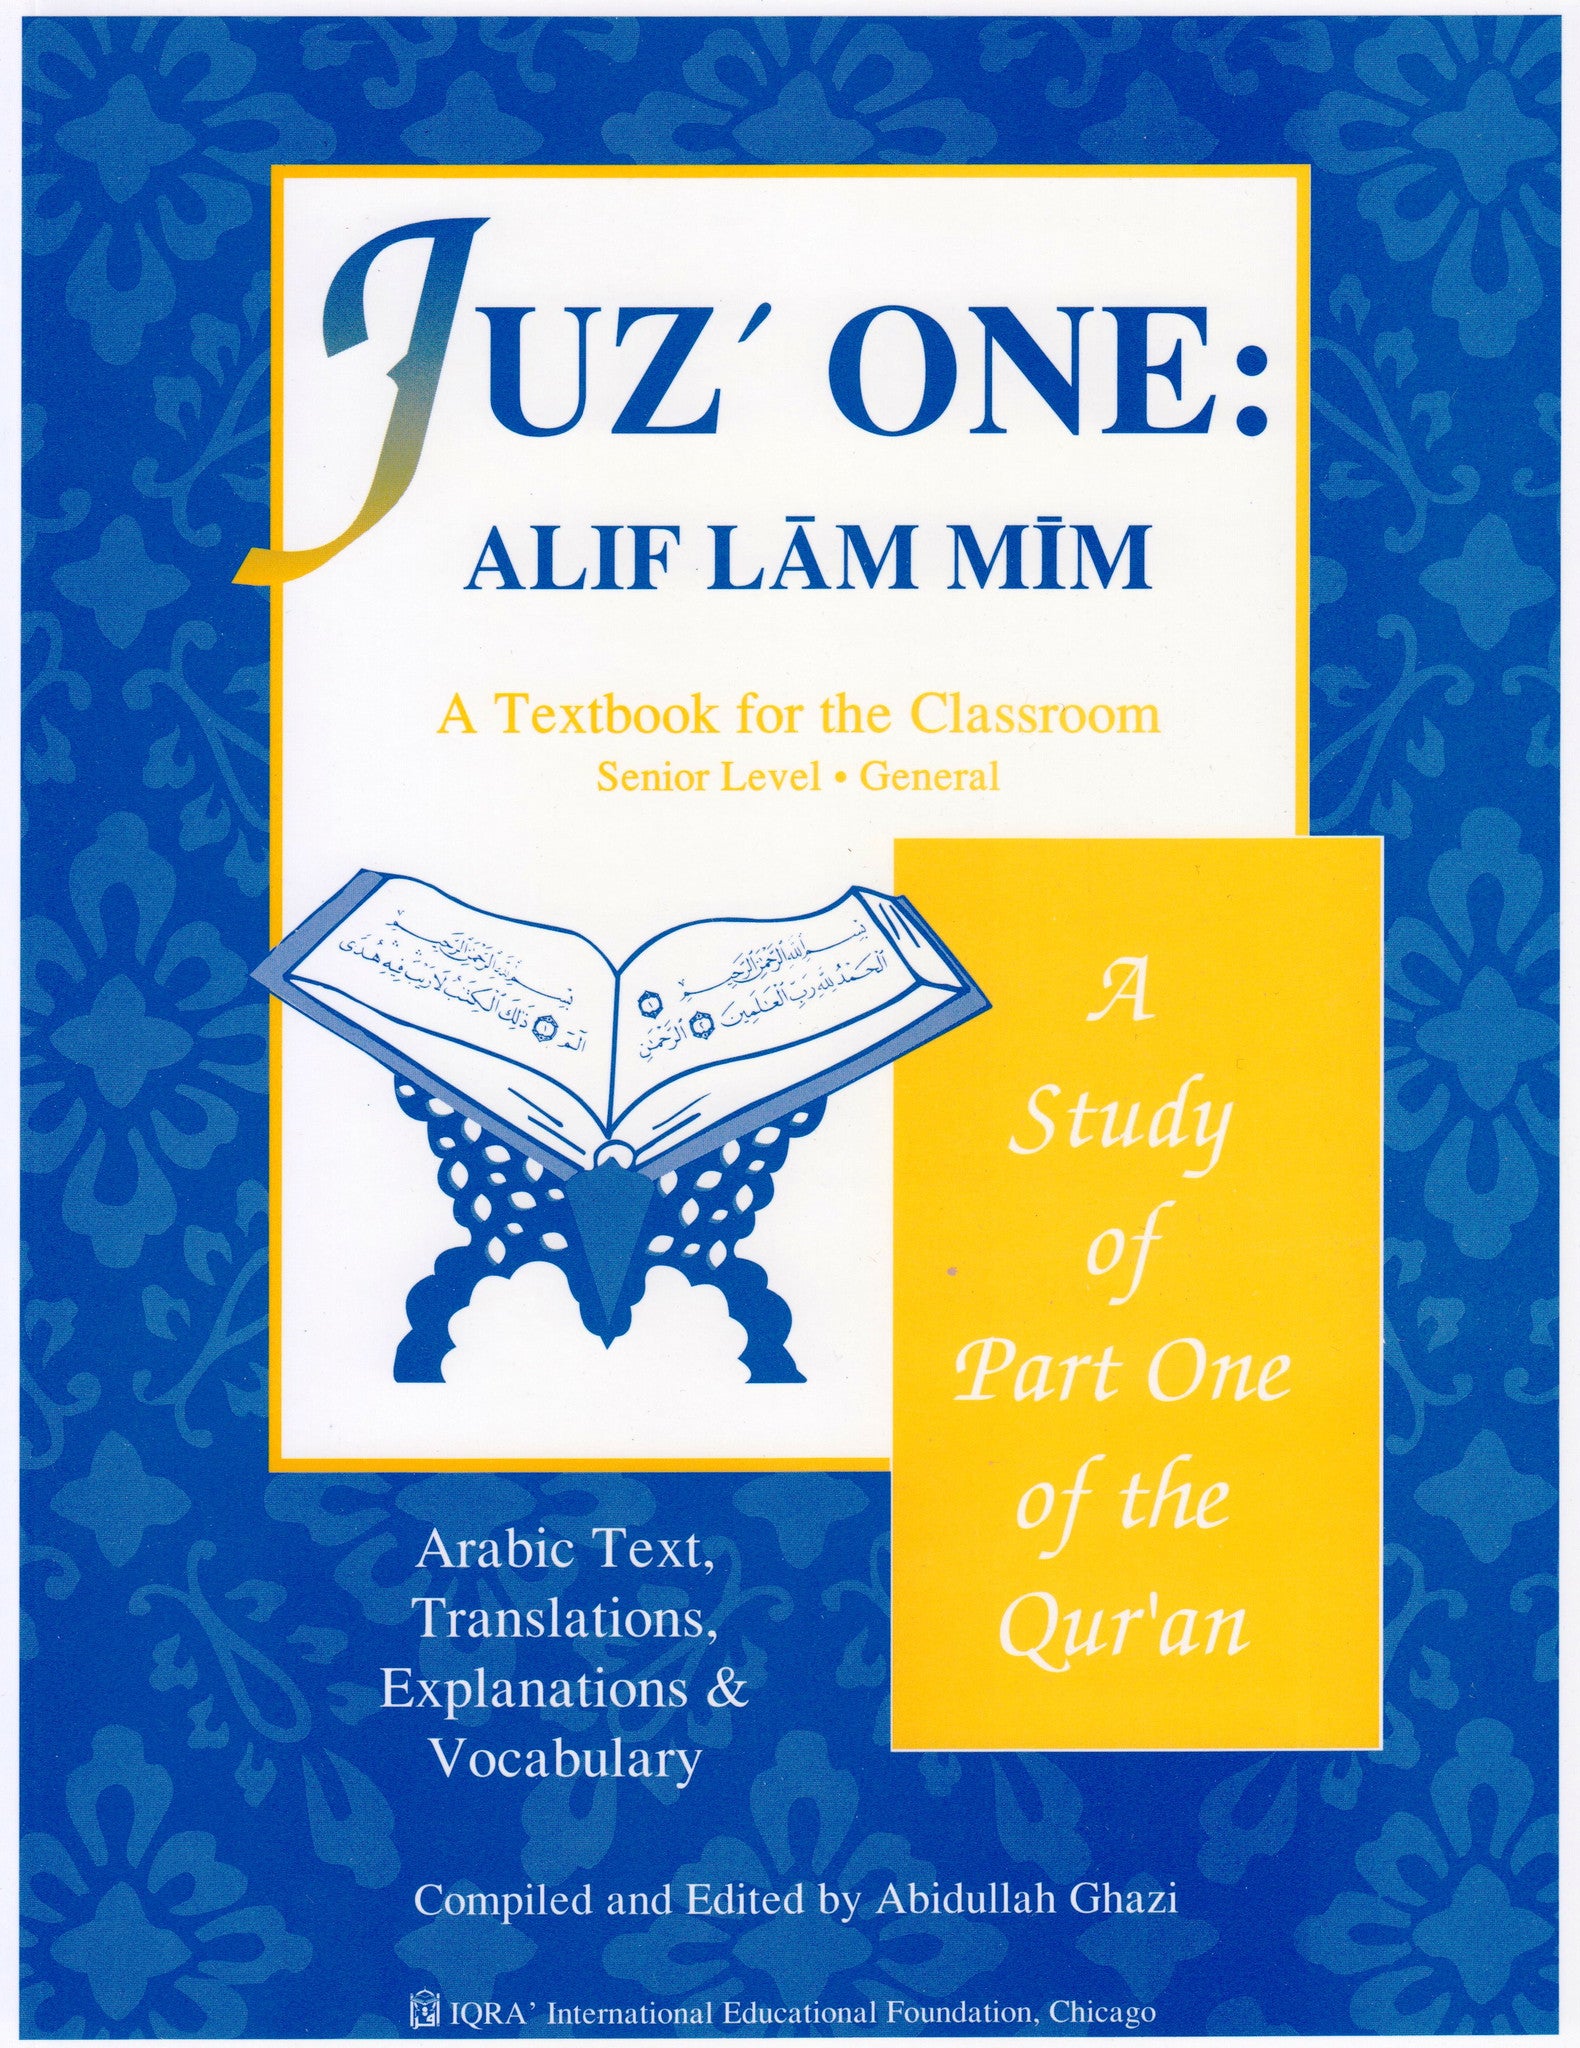 Juz' One Alif Lam Mim Textbook